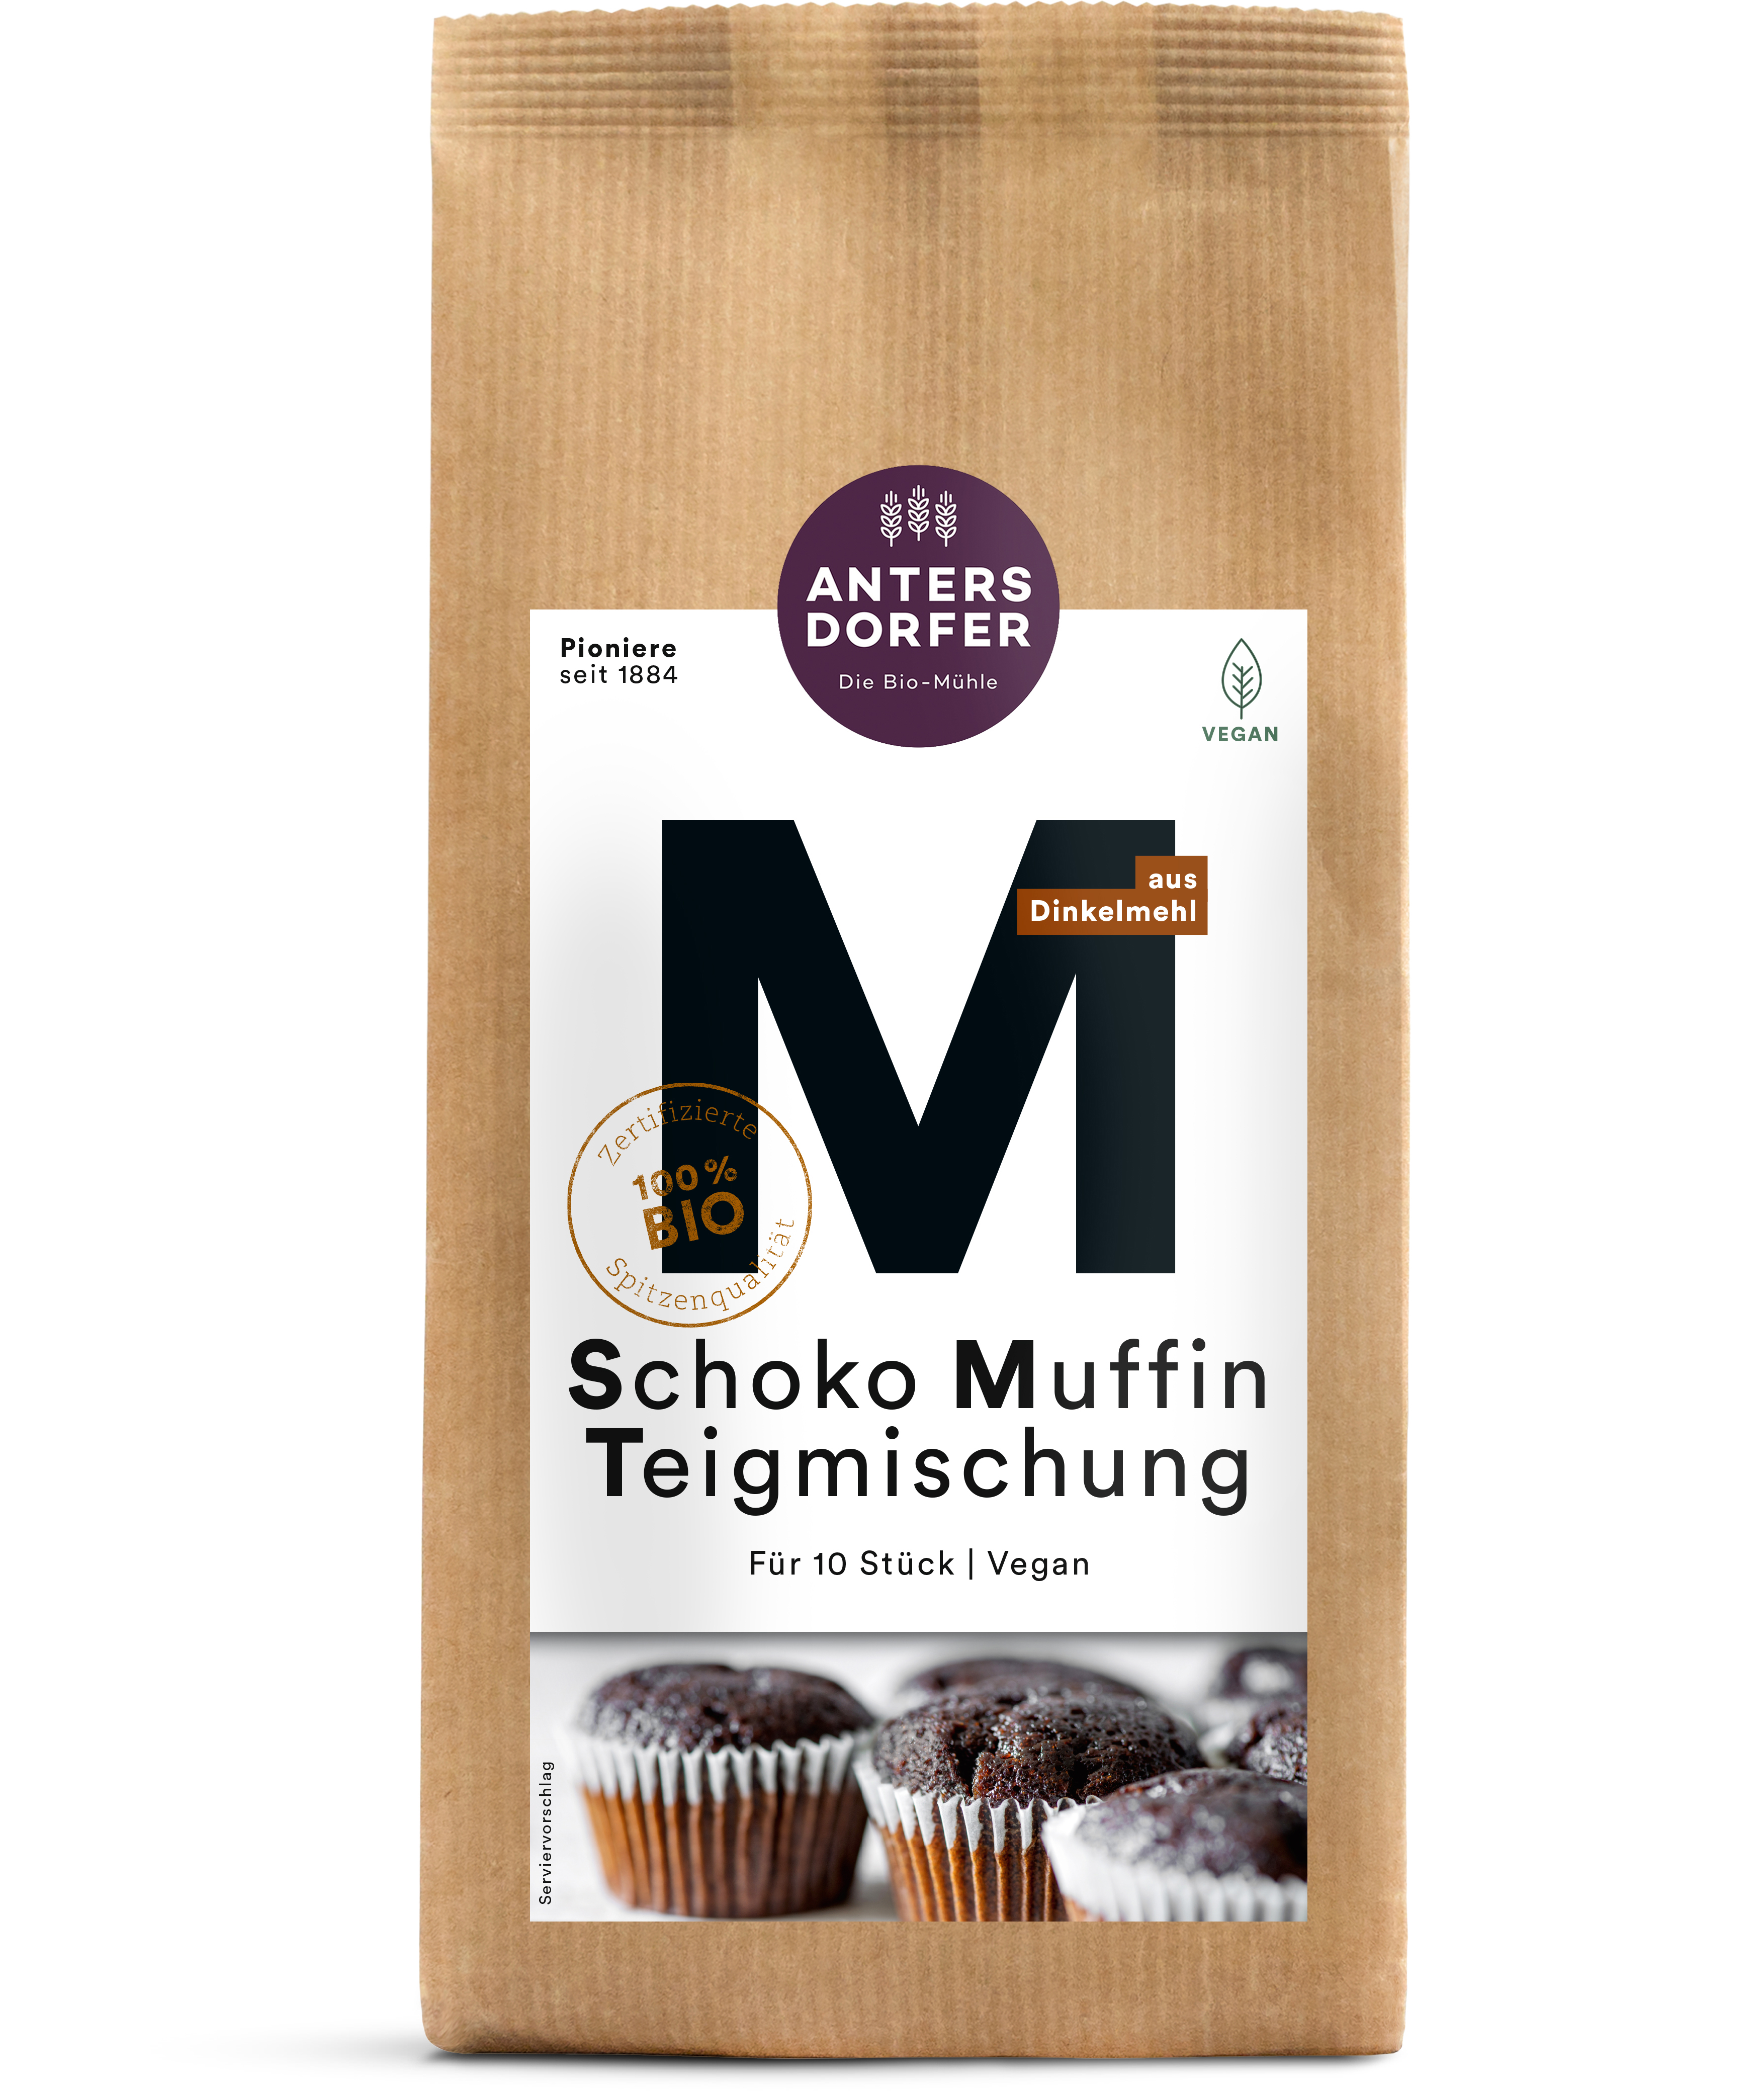 Schoko Muffin Teigmischung